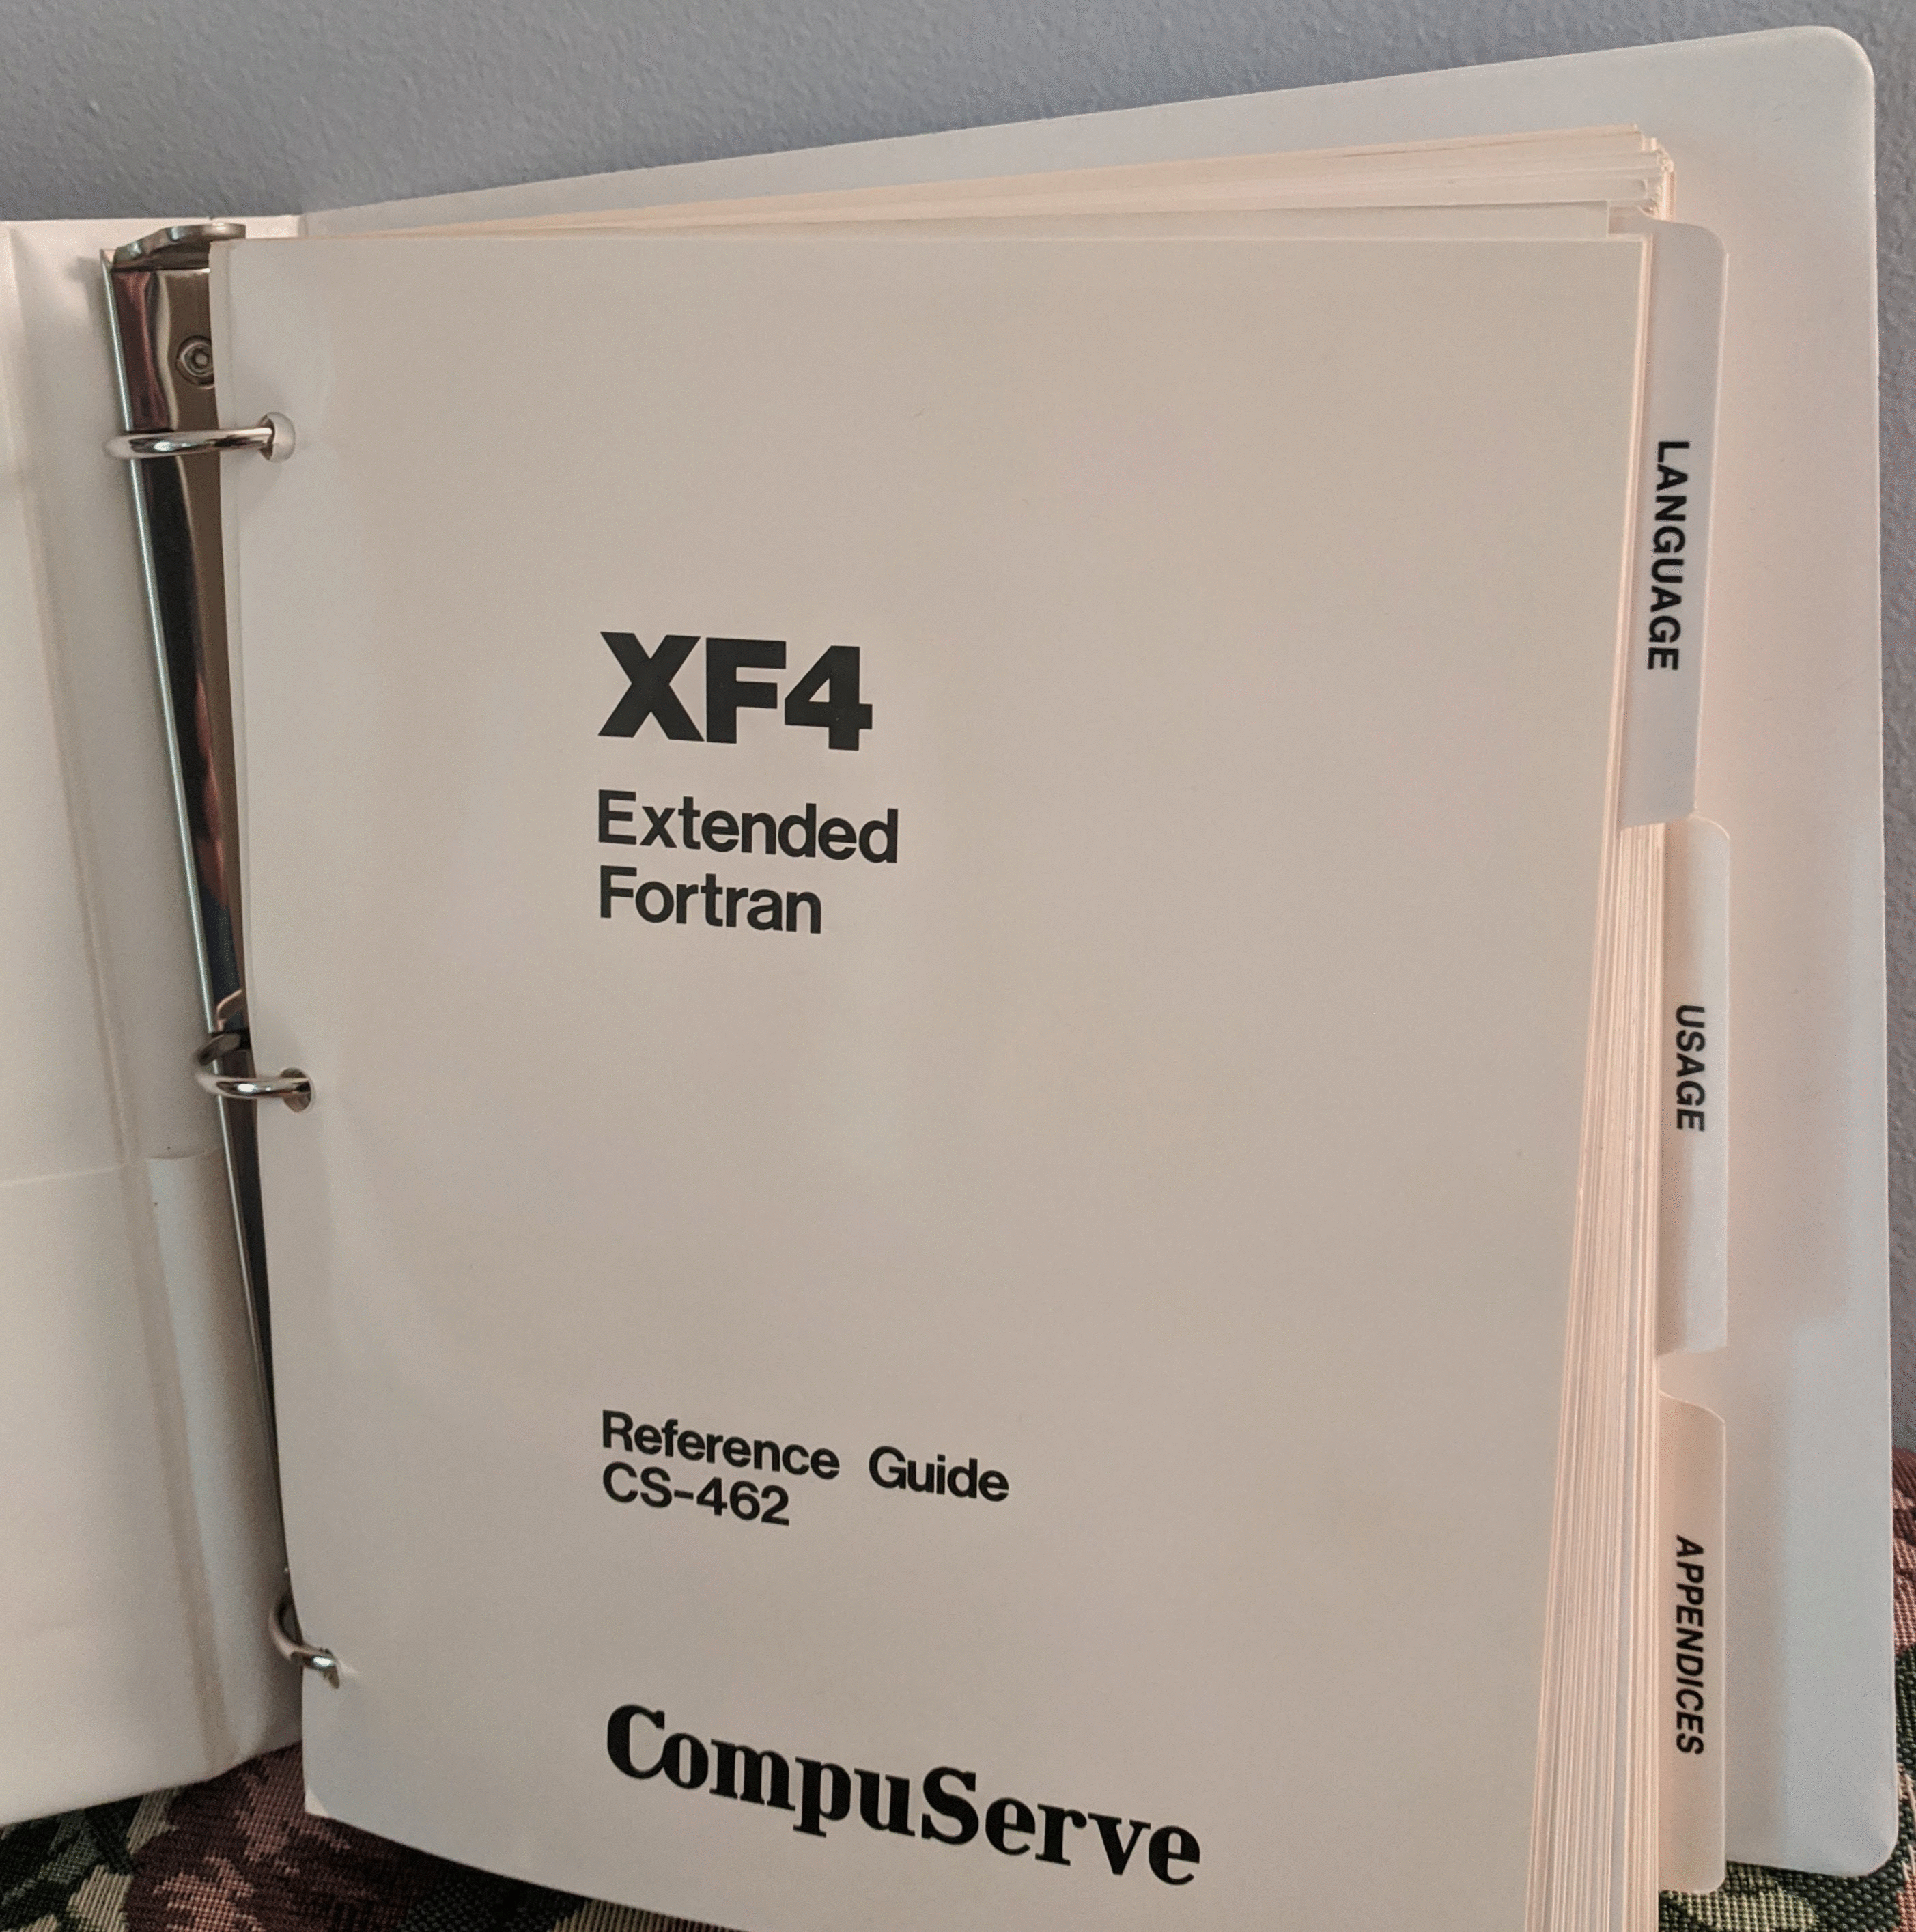 Figure 1: CompuServe XF4 Fortran Manual